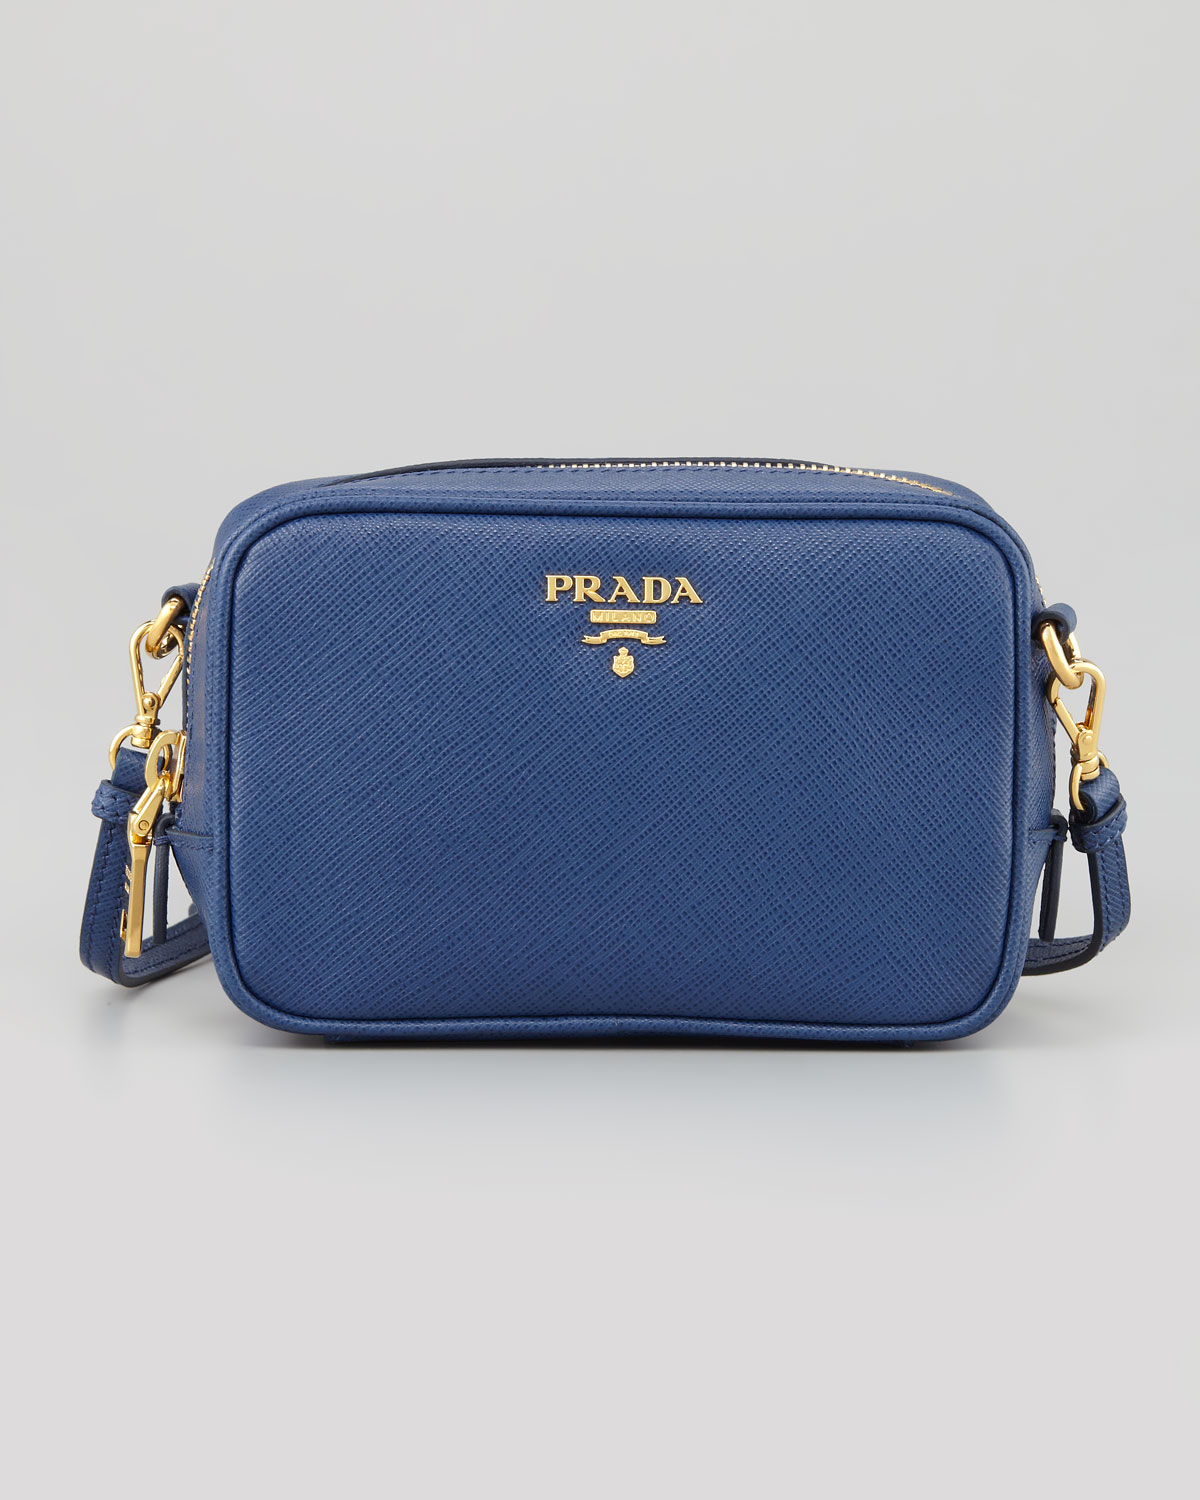 Prada Saffiano Mini Zip Crossbody Bag in Blue - Lyst